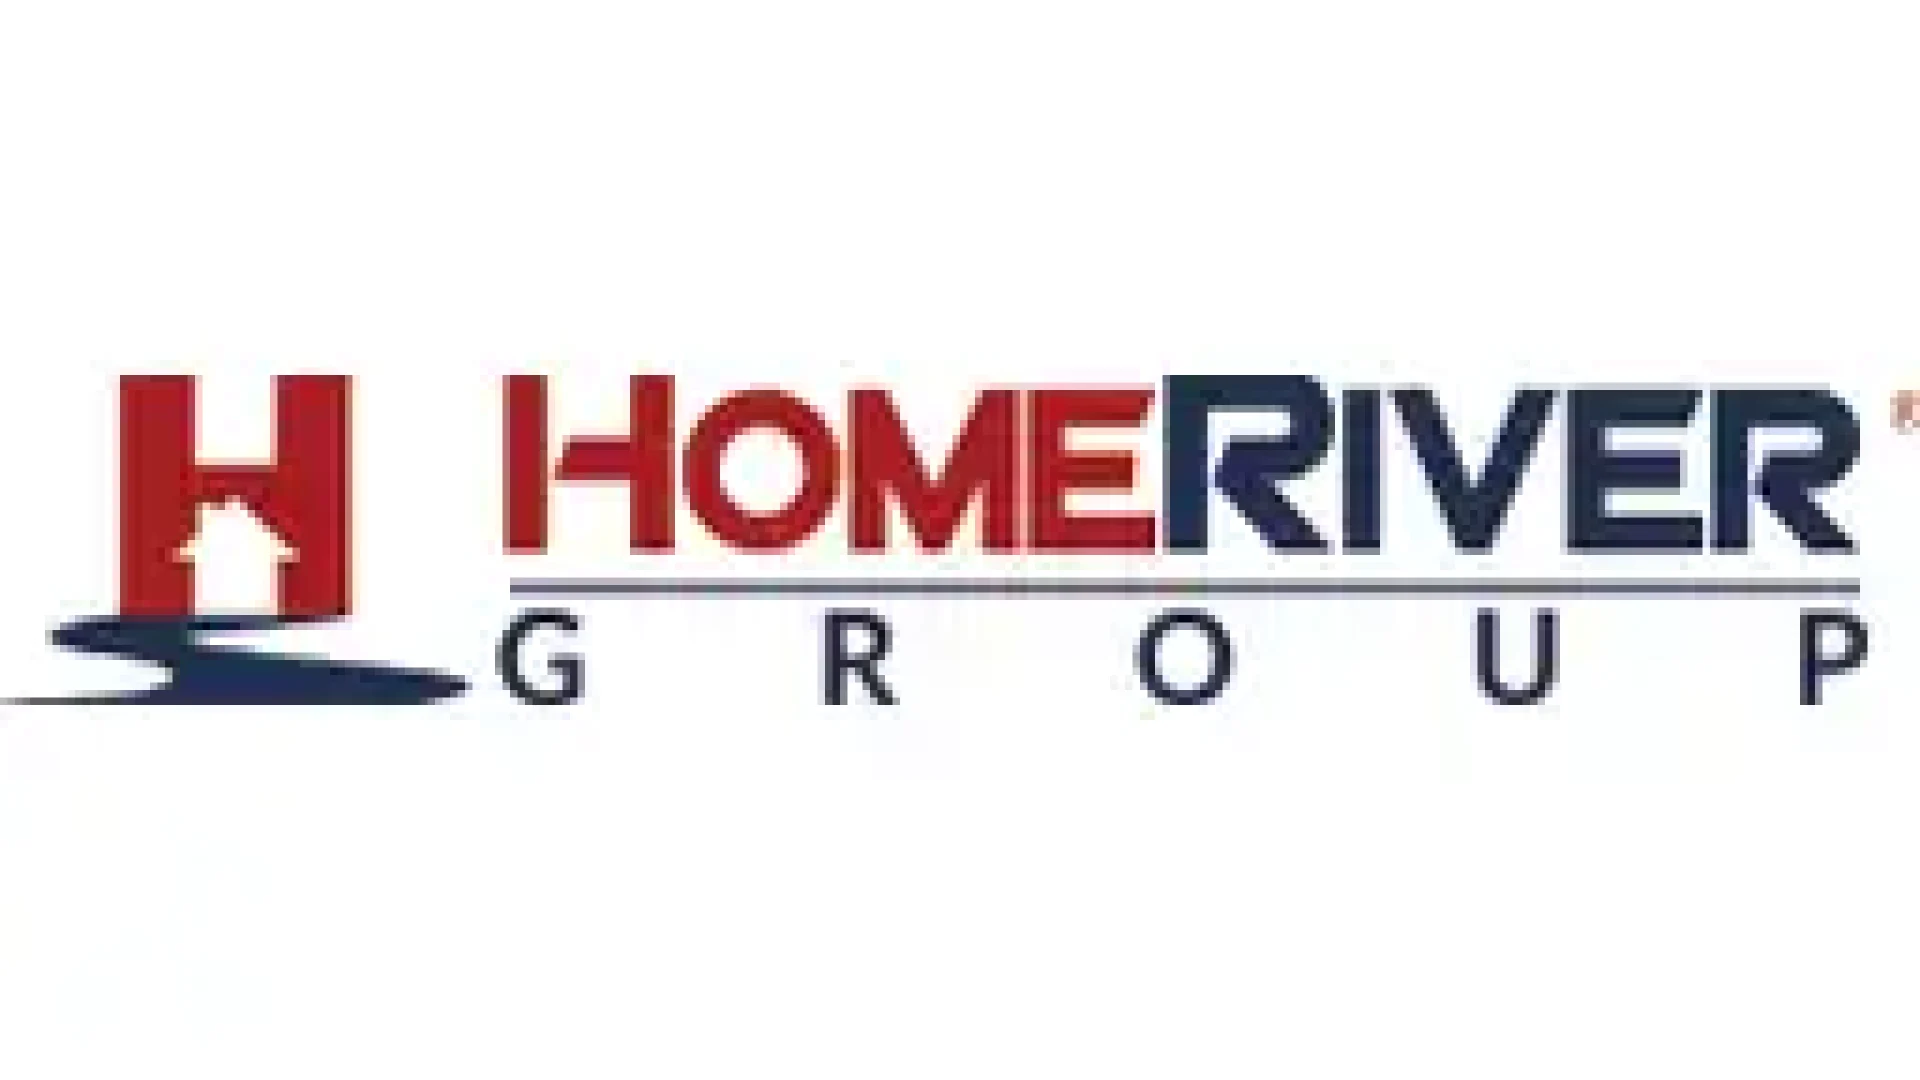 HomeRiver Group logo